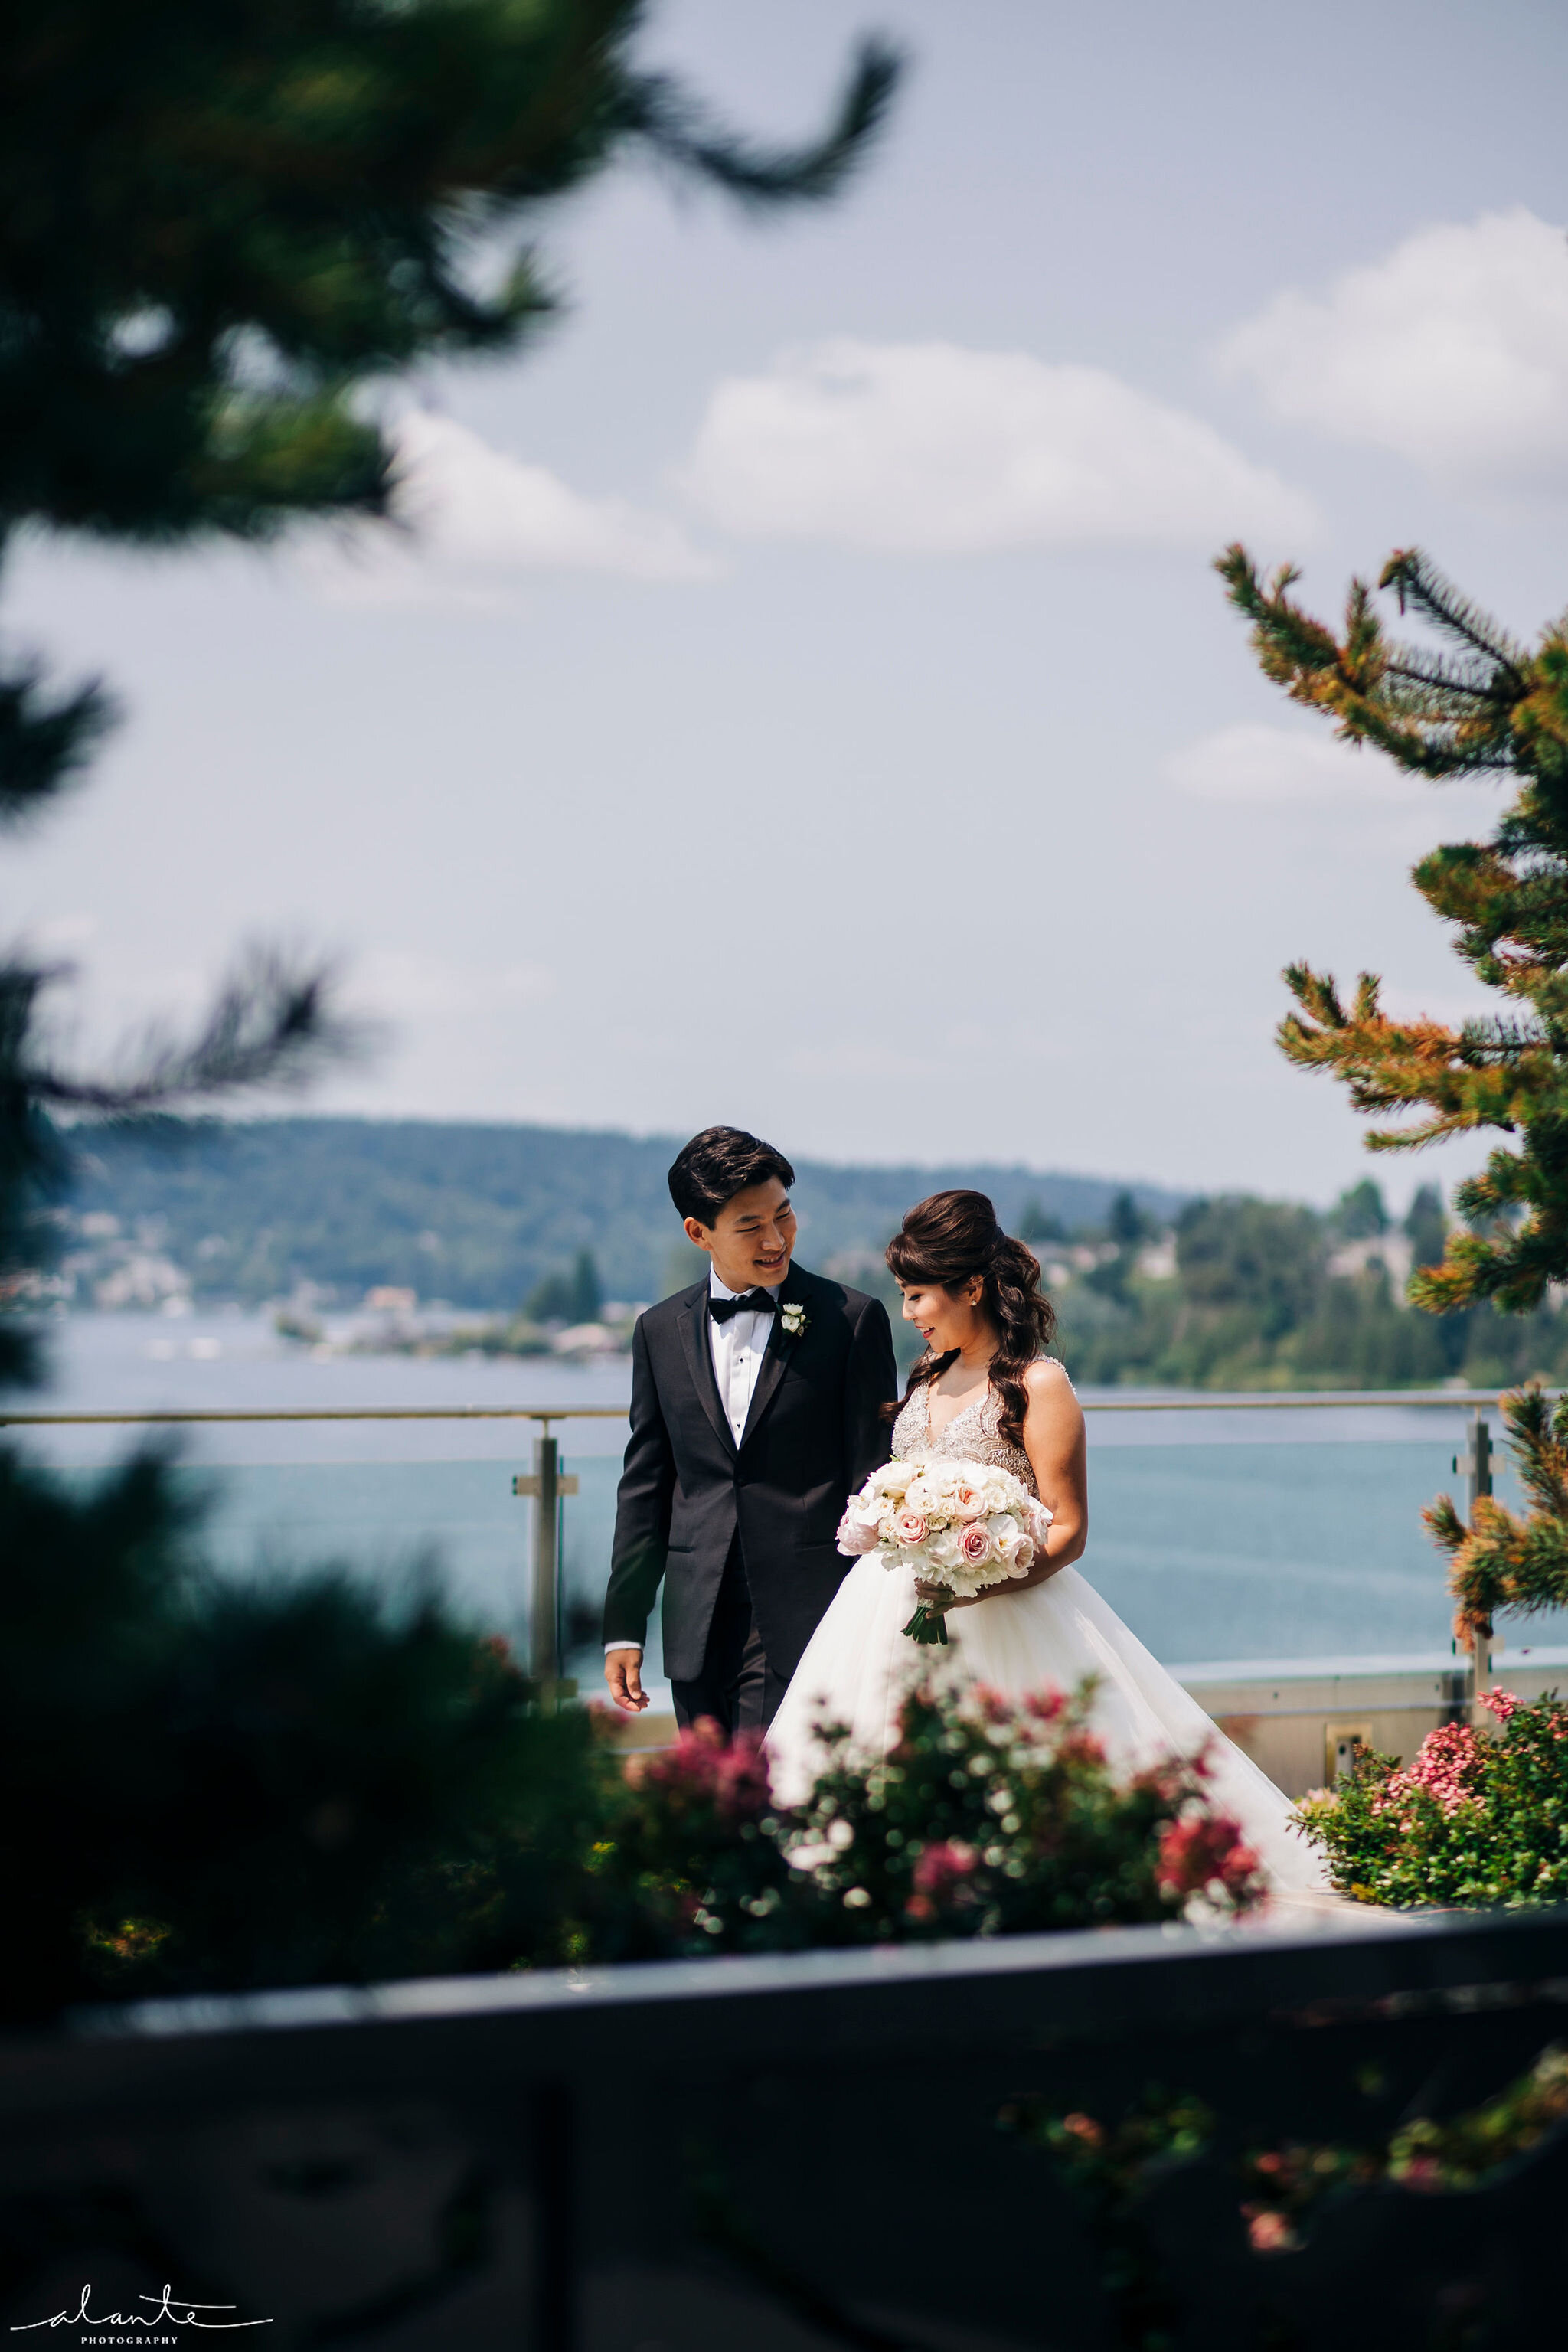 Alante-Photography-Seattle-Washington-Wedding-Hyatt-Regency-Lake-Washington-024.jpg